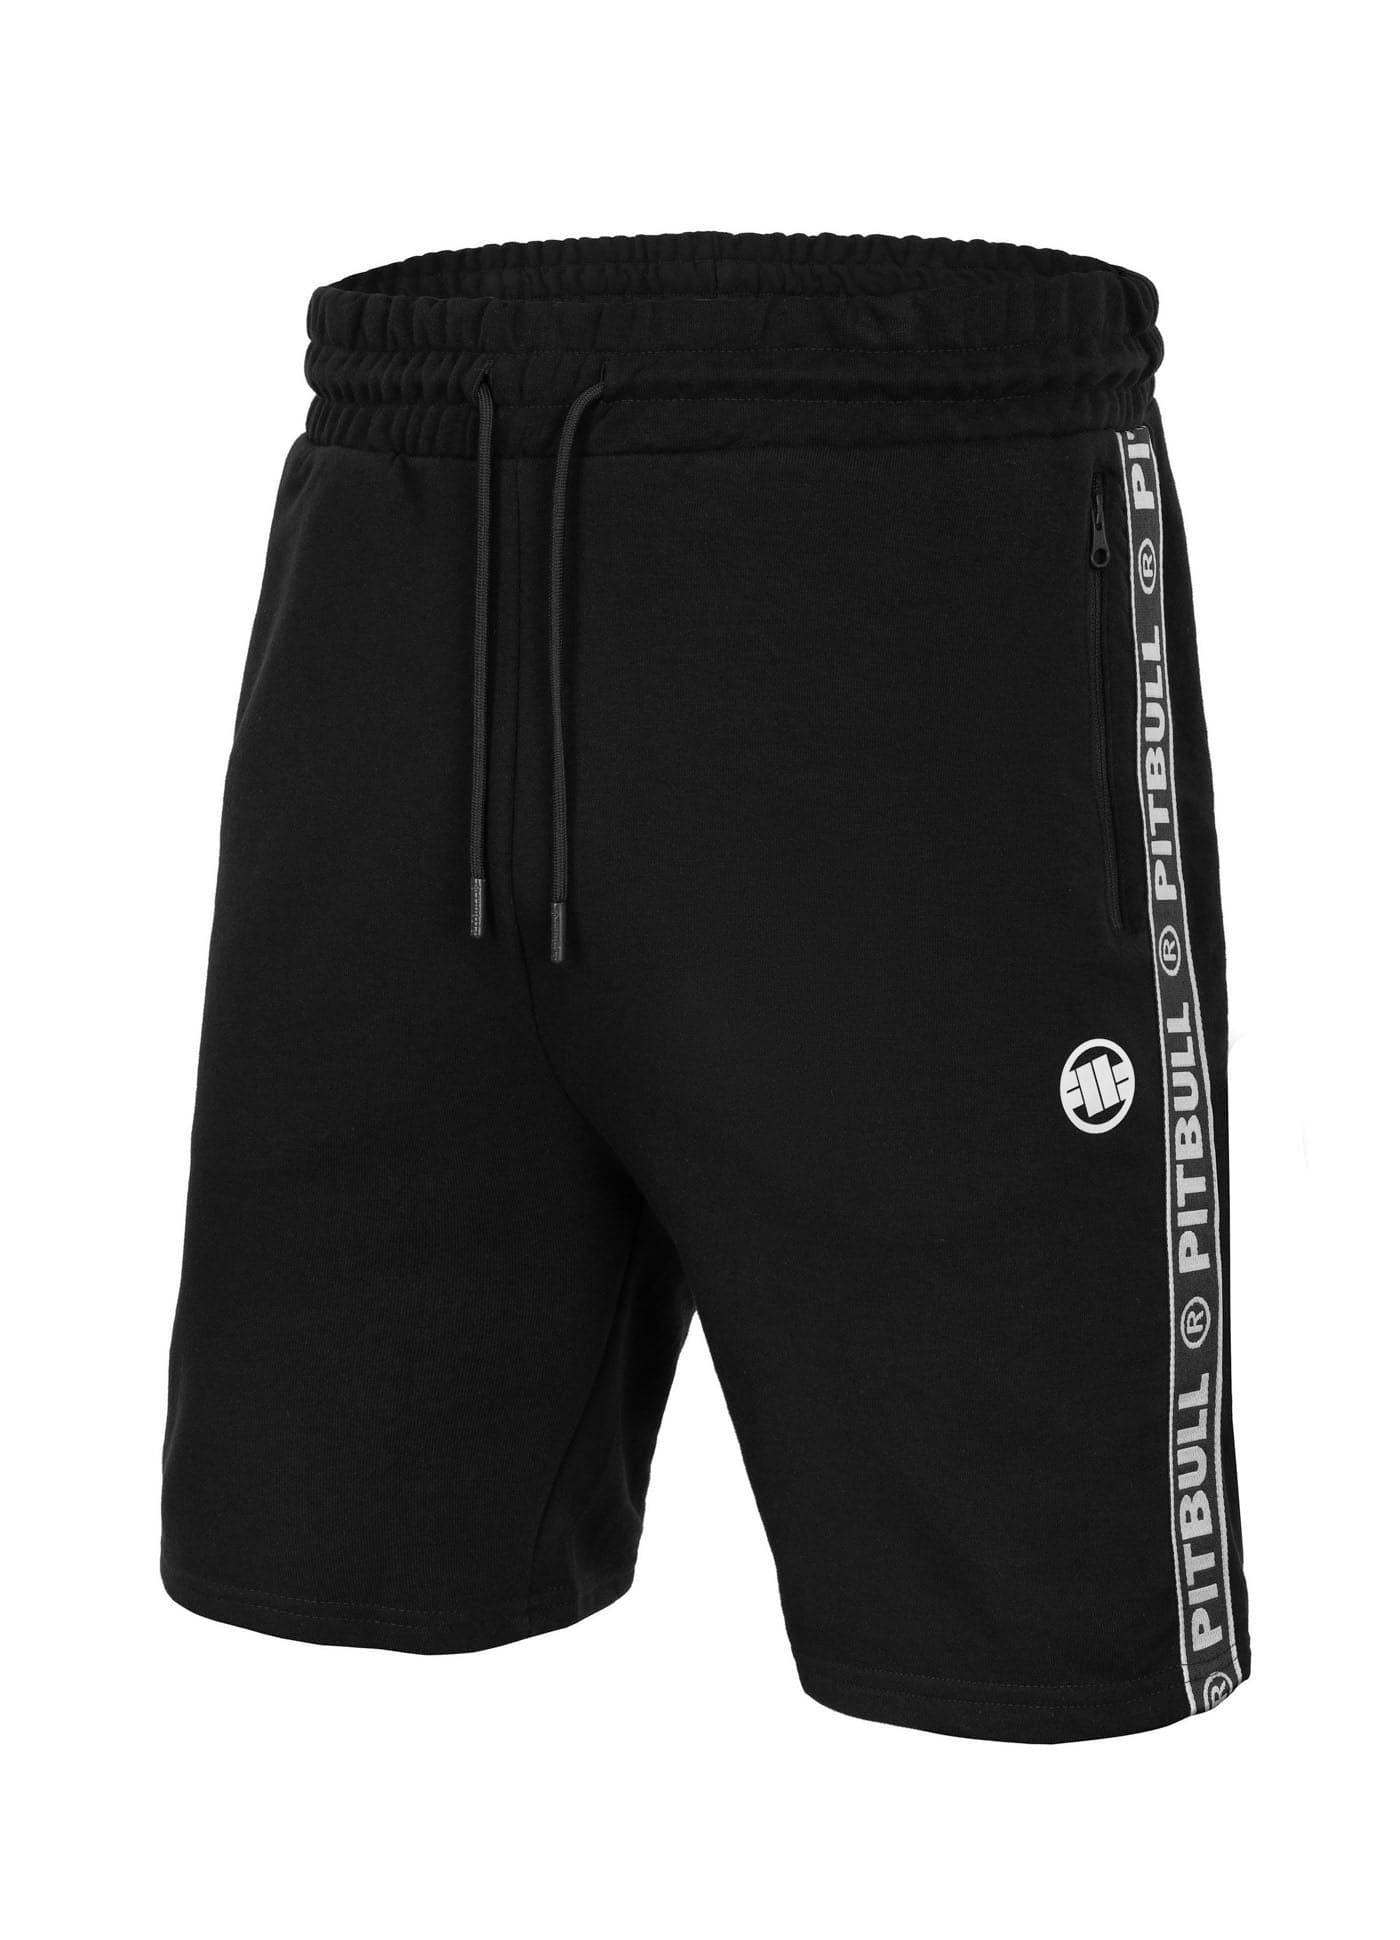 BADGER Black Shorts - Pitbullstore.eu